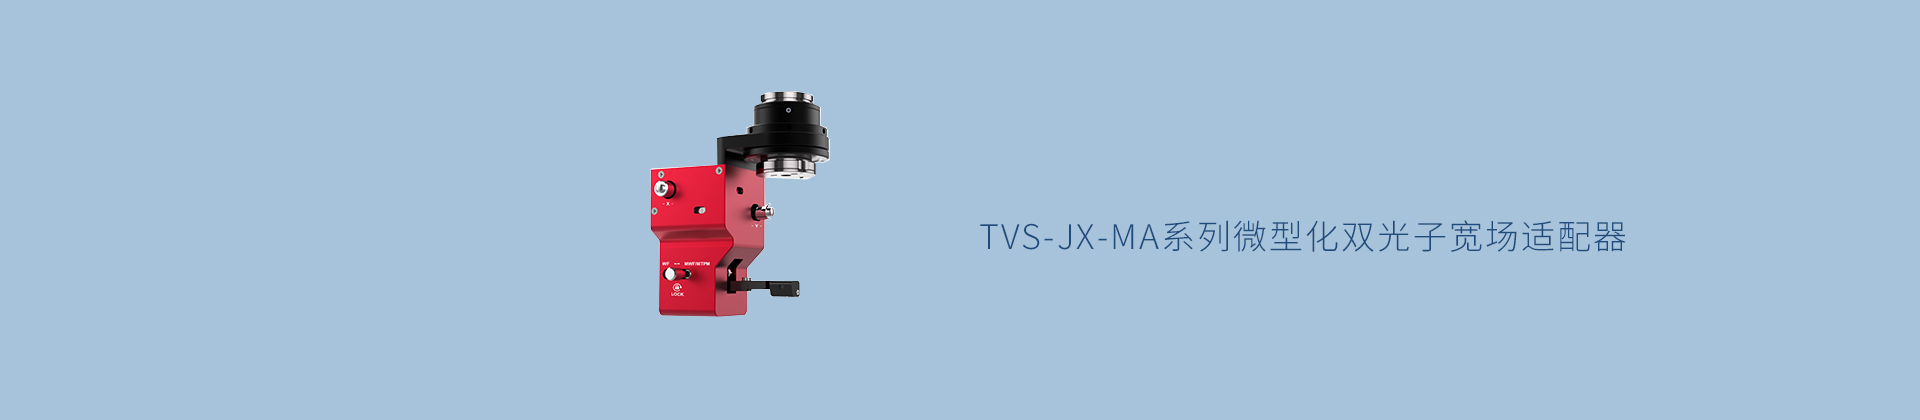 TVS-JX-MA系列微型化双光子宽场适配器